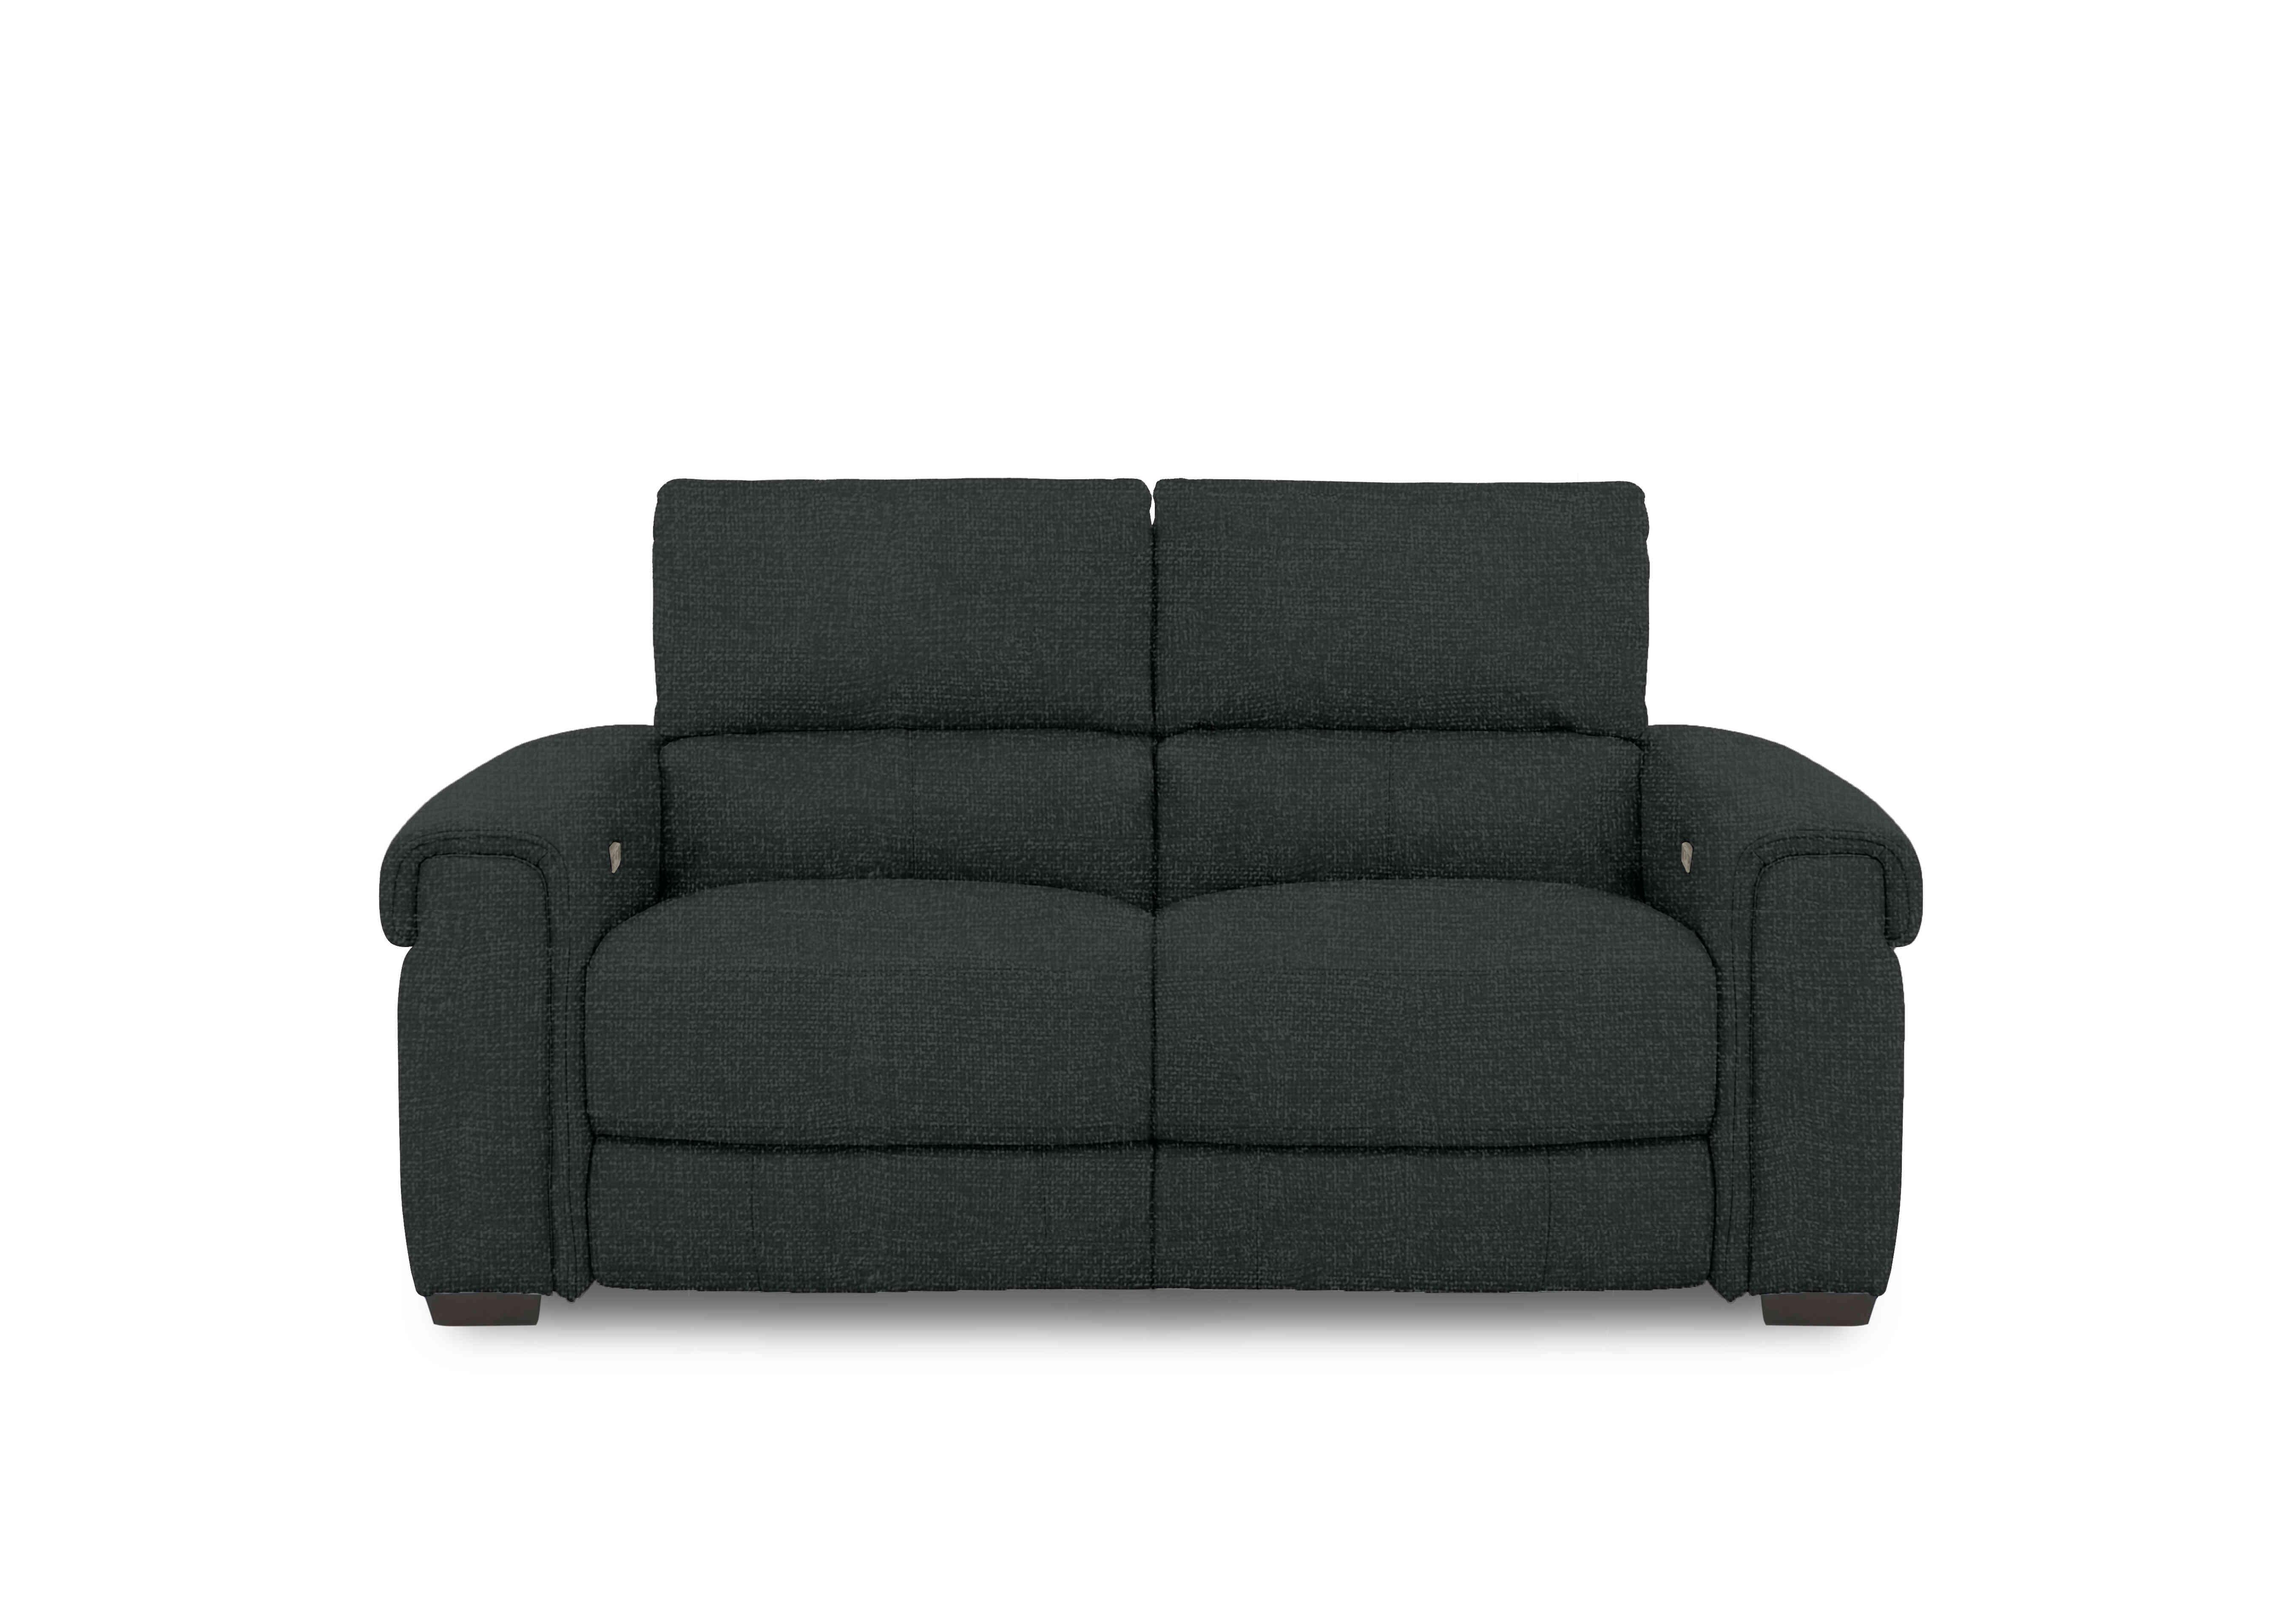 Nixon Fabric 2 Seater Sofa in Fab-Cac-R463 Black Mica on Furniture Village